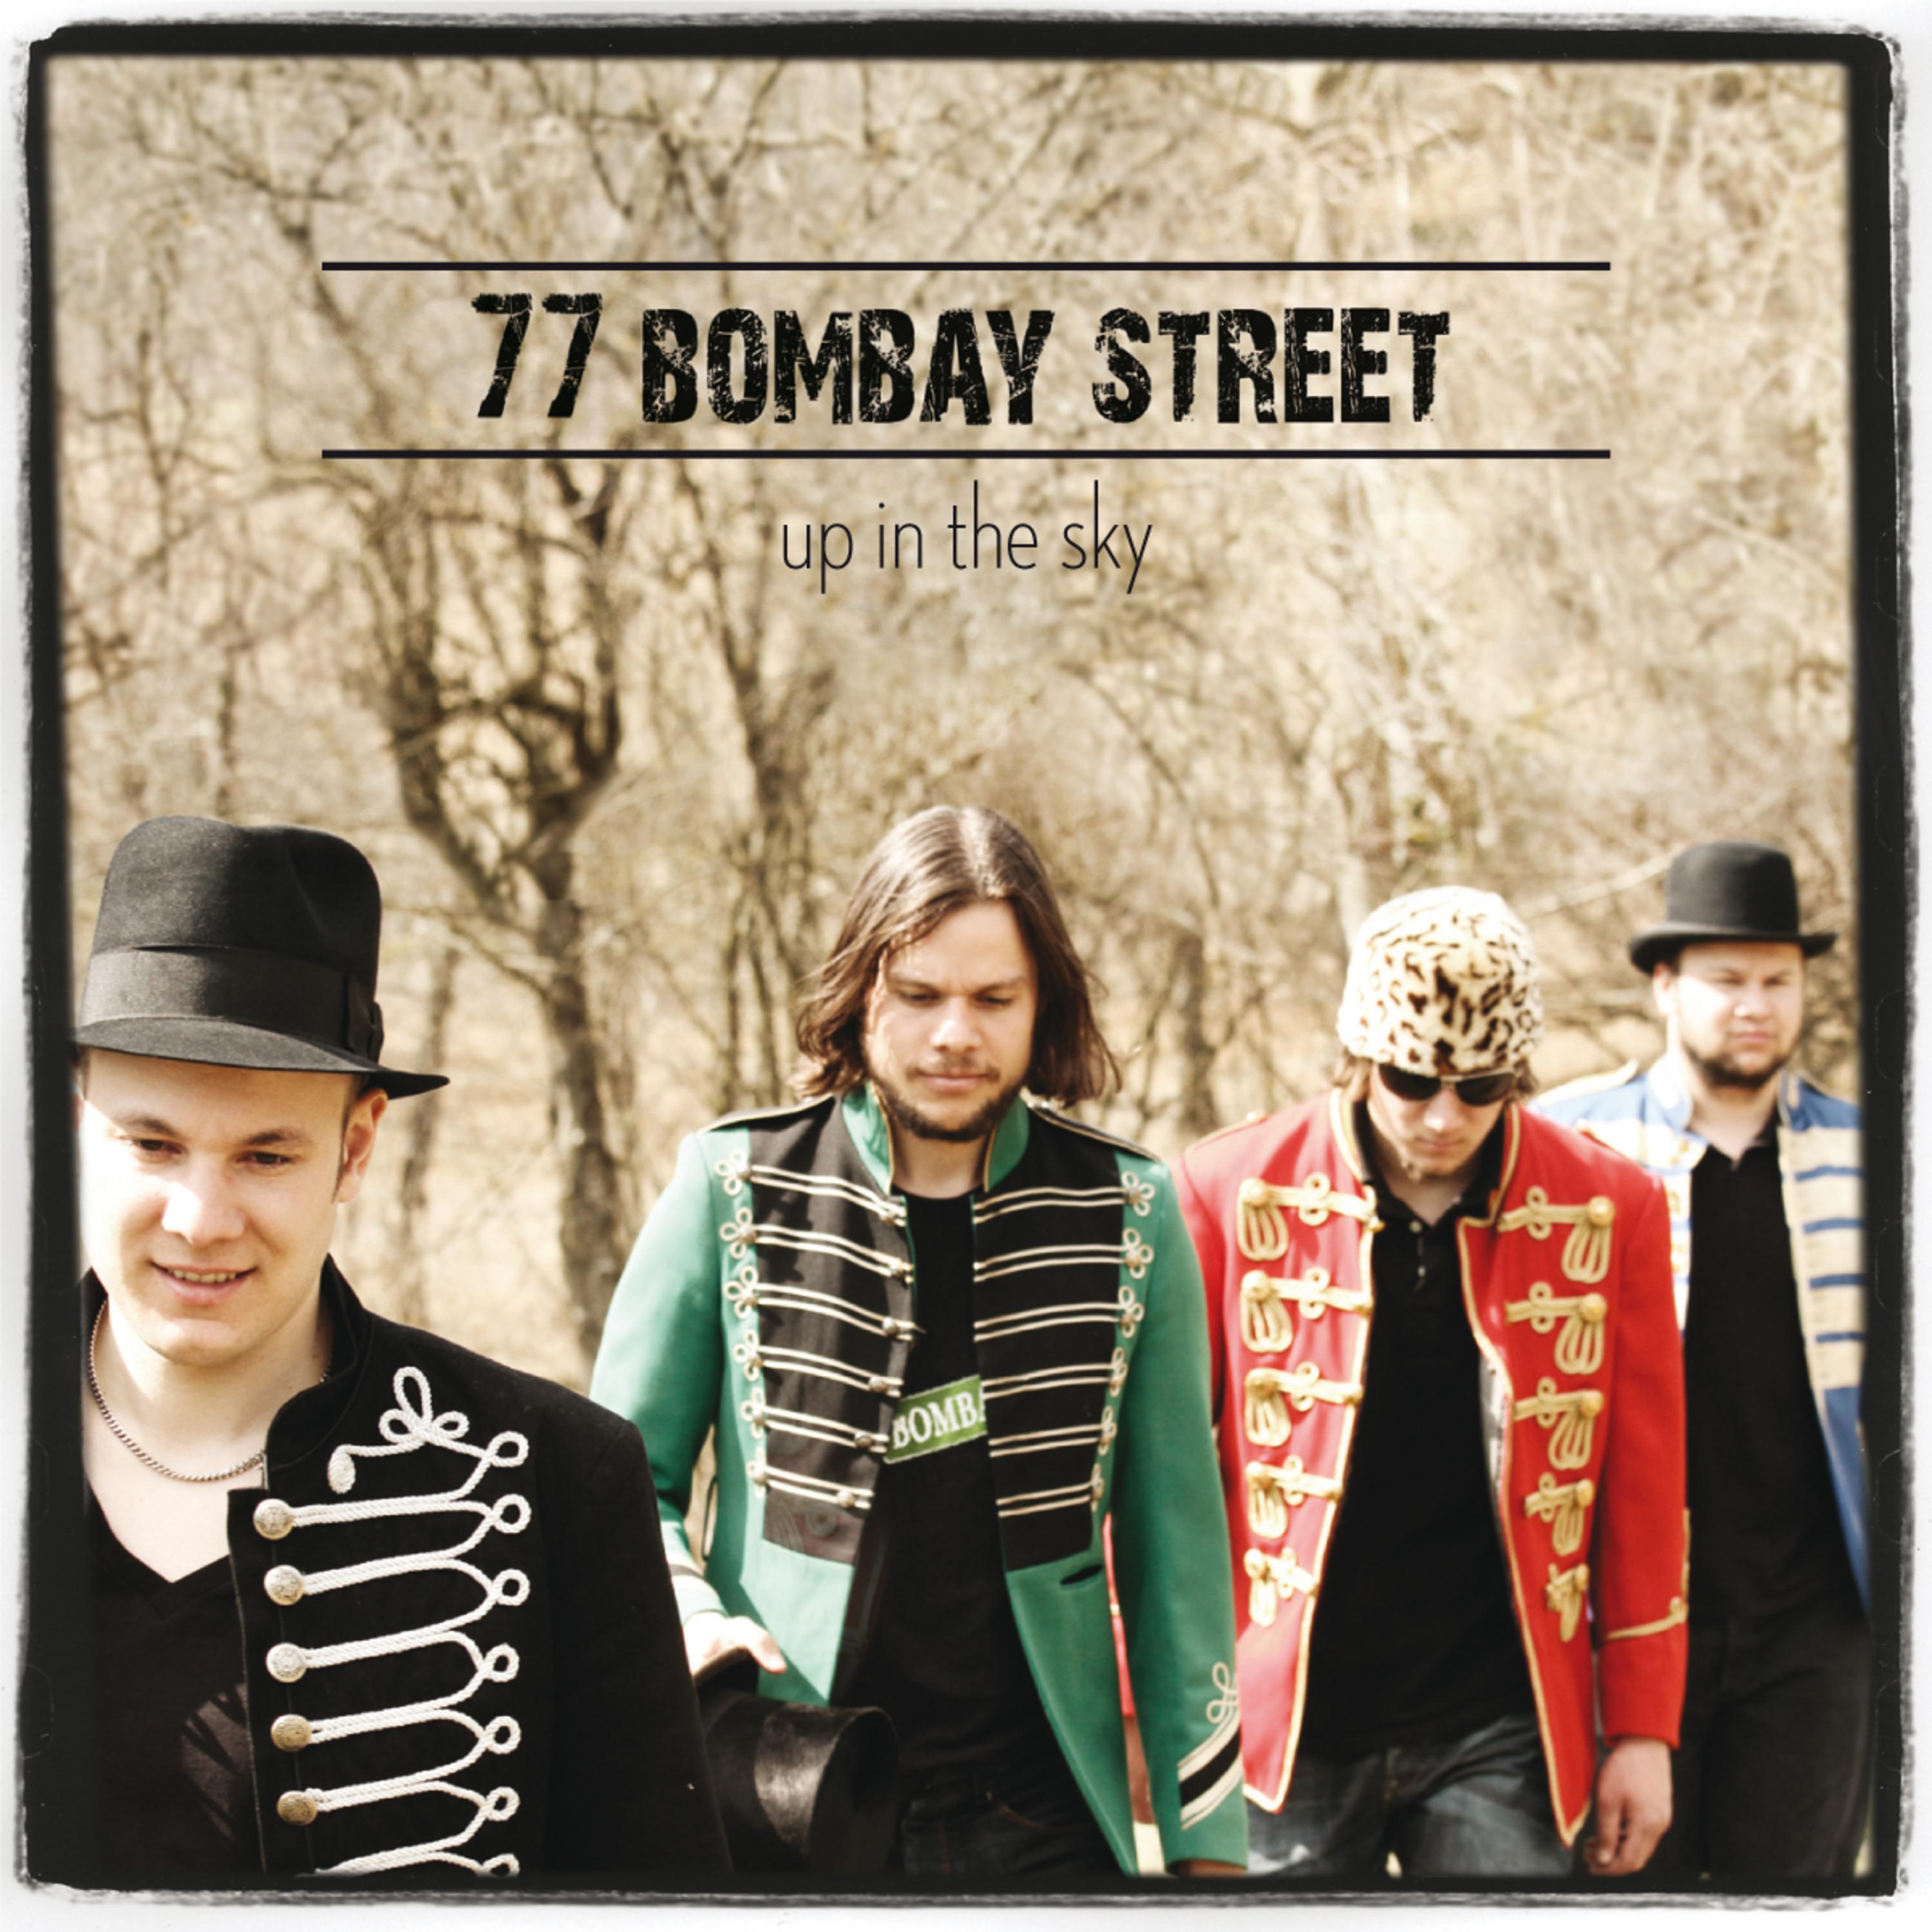 77 Bombay Street - Get Away